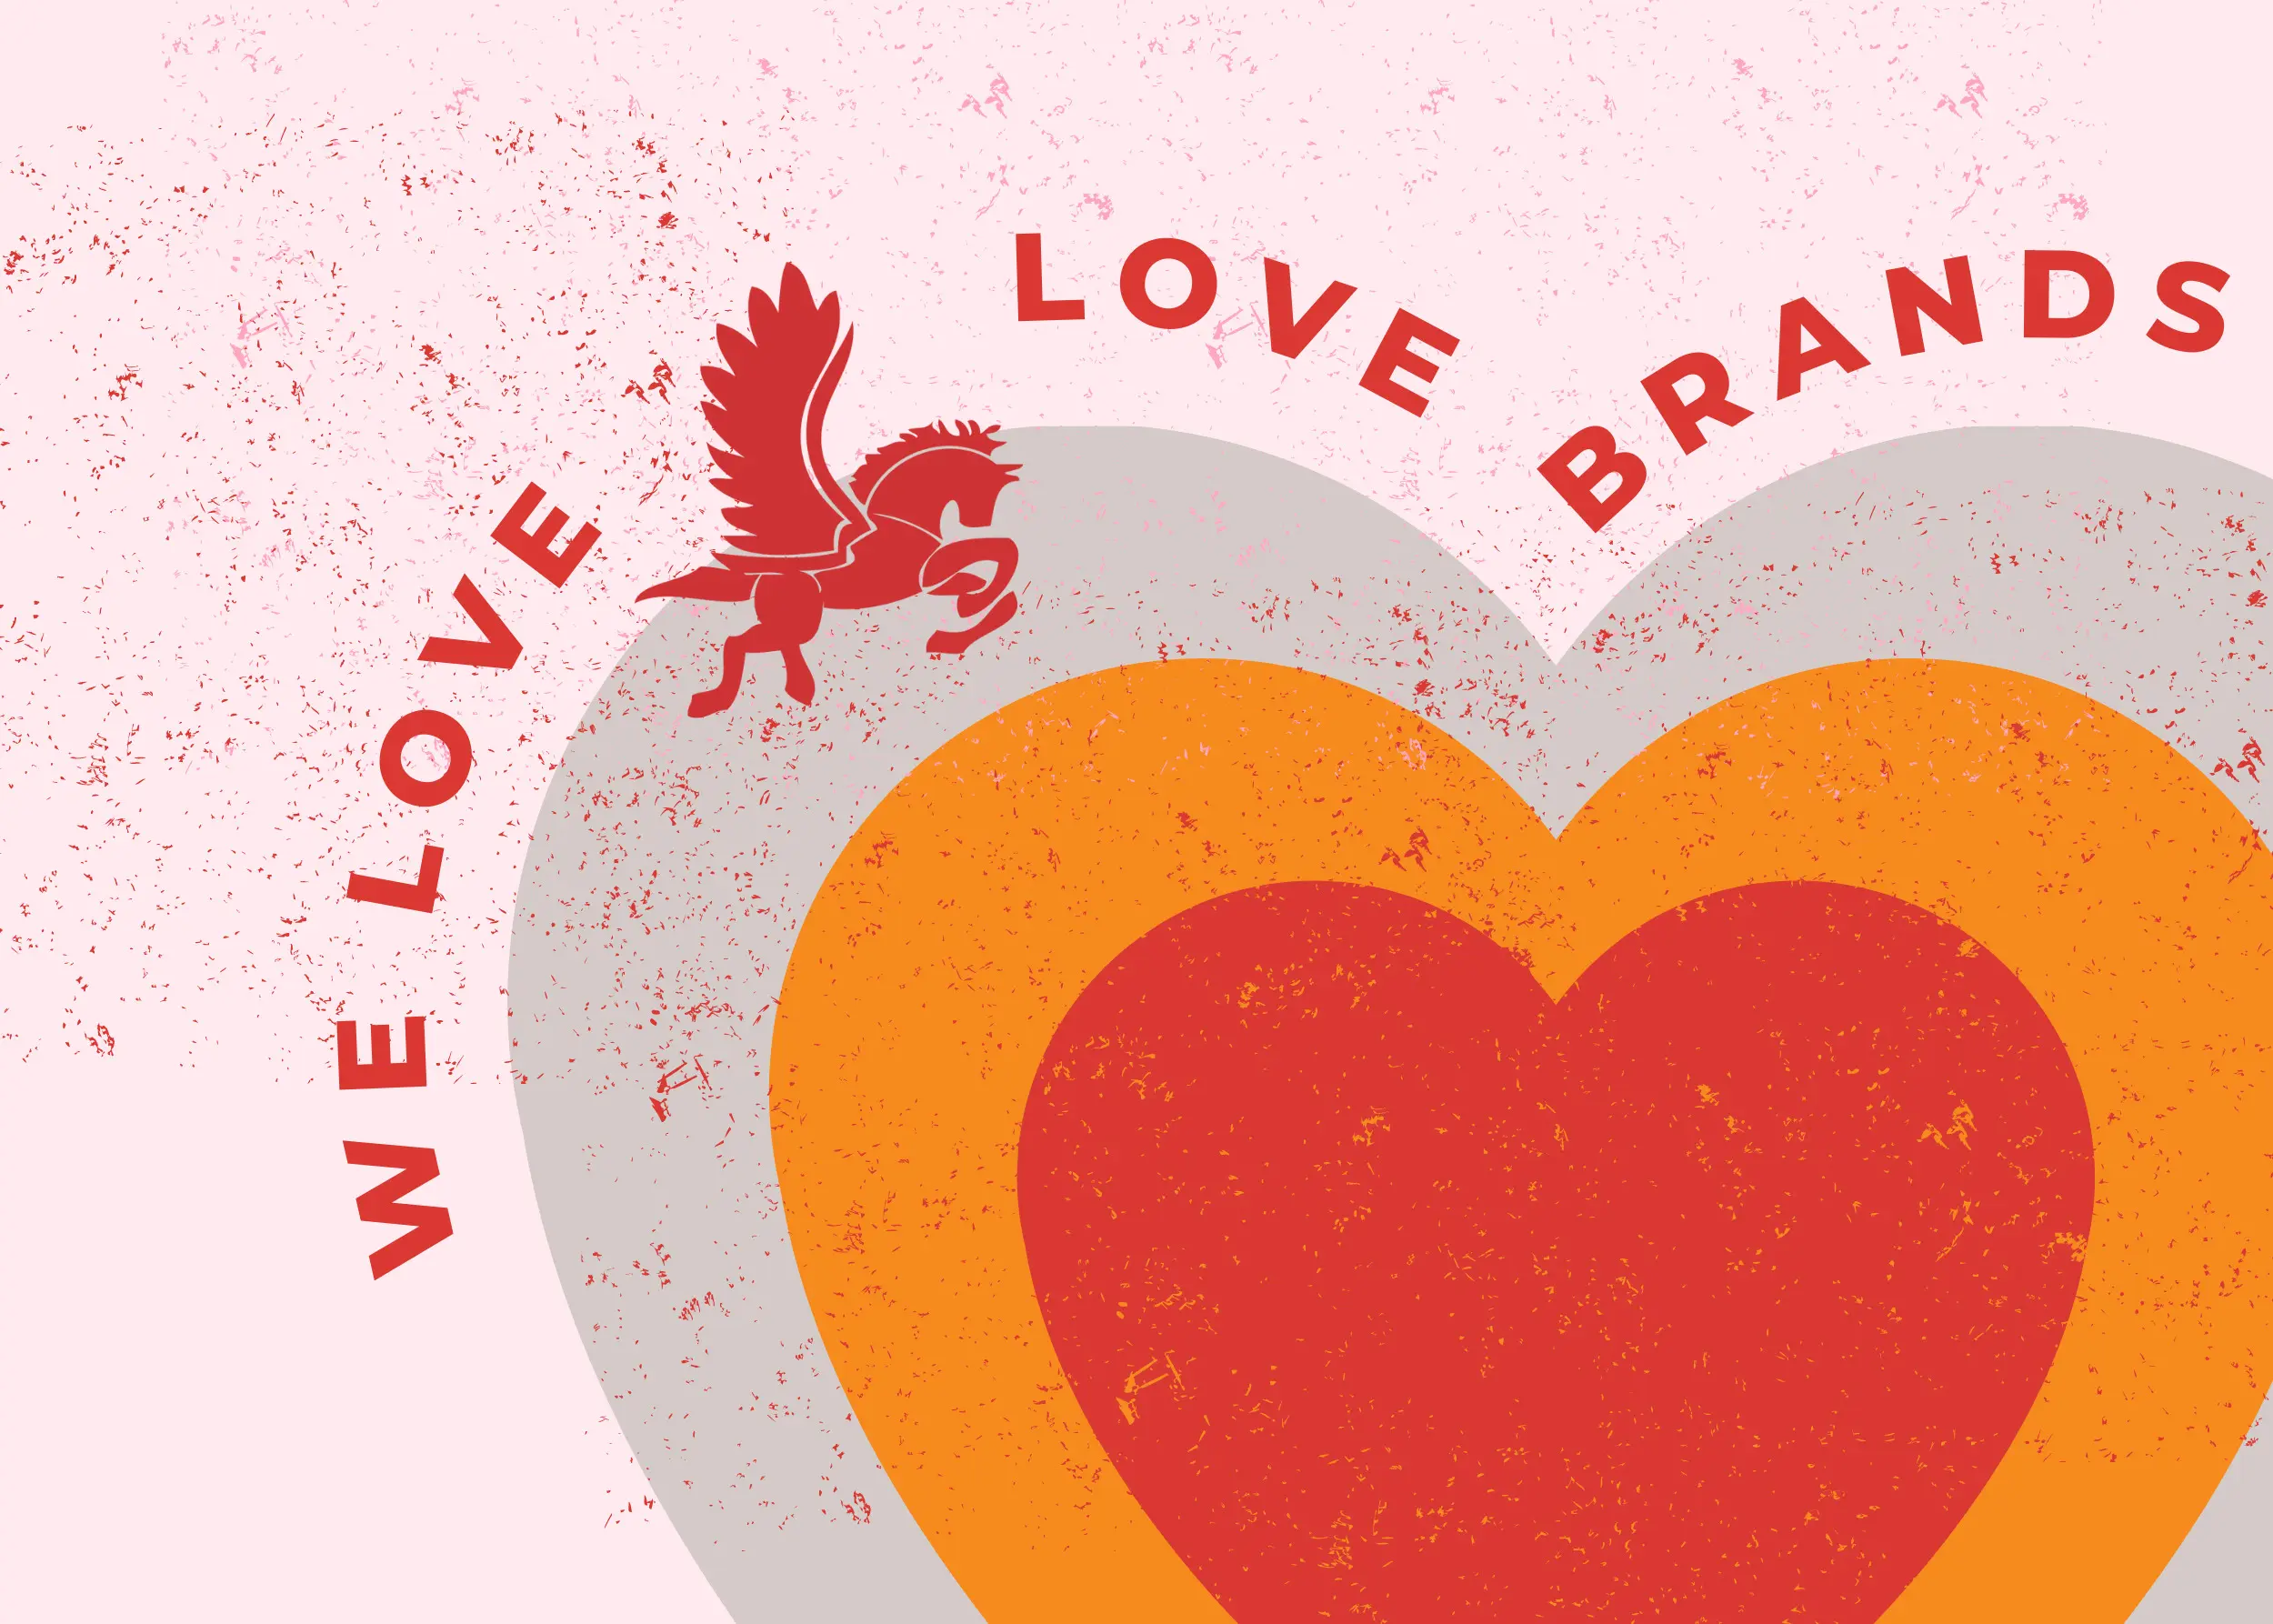 We Love Love Brands